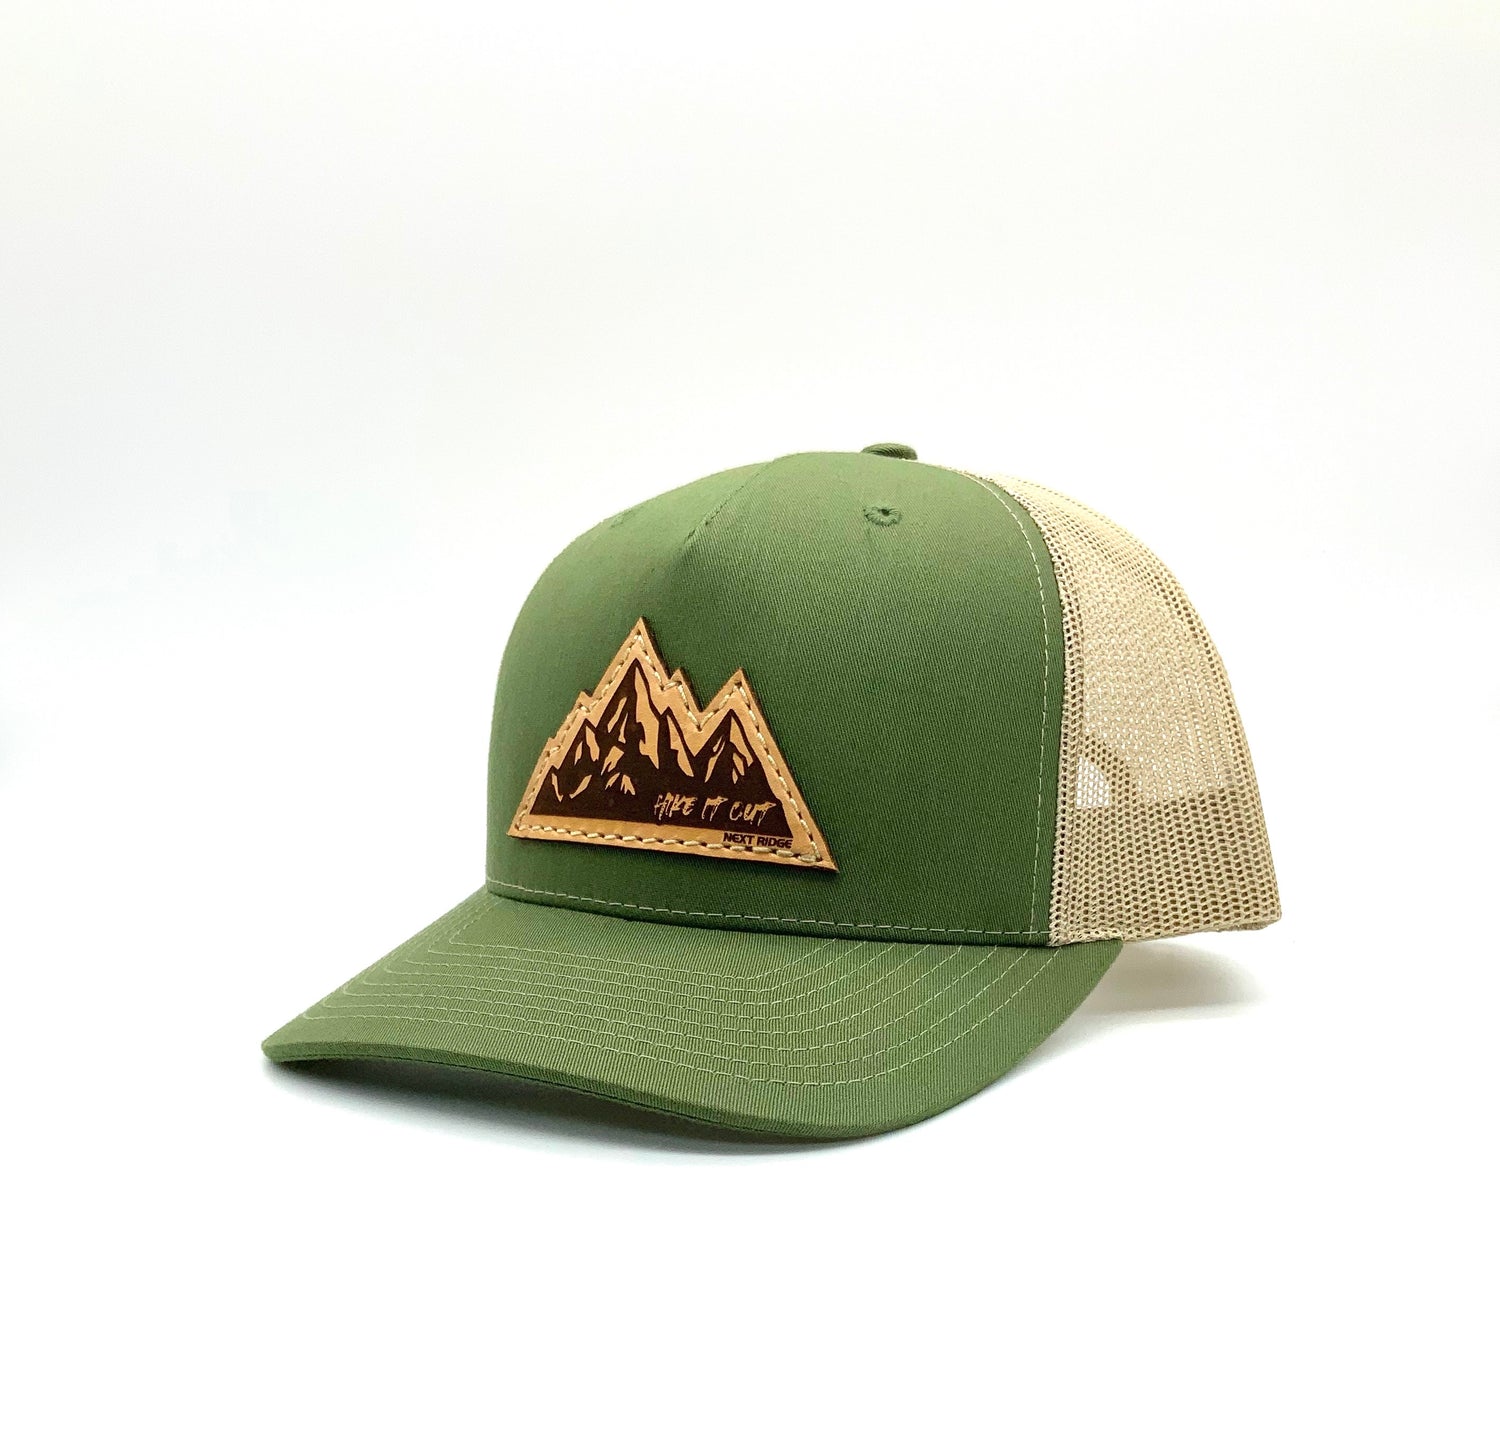 next Ridge Apparel mountain hiking hat hike it out leather patch green khaki Richardson 112 five panel